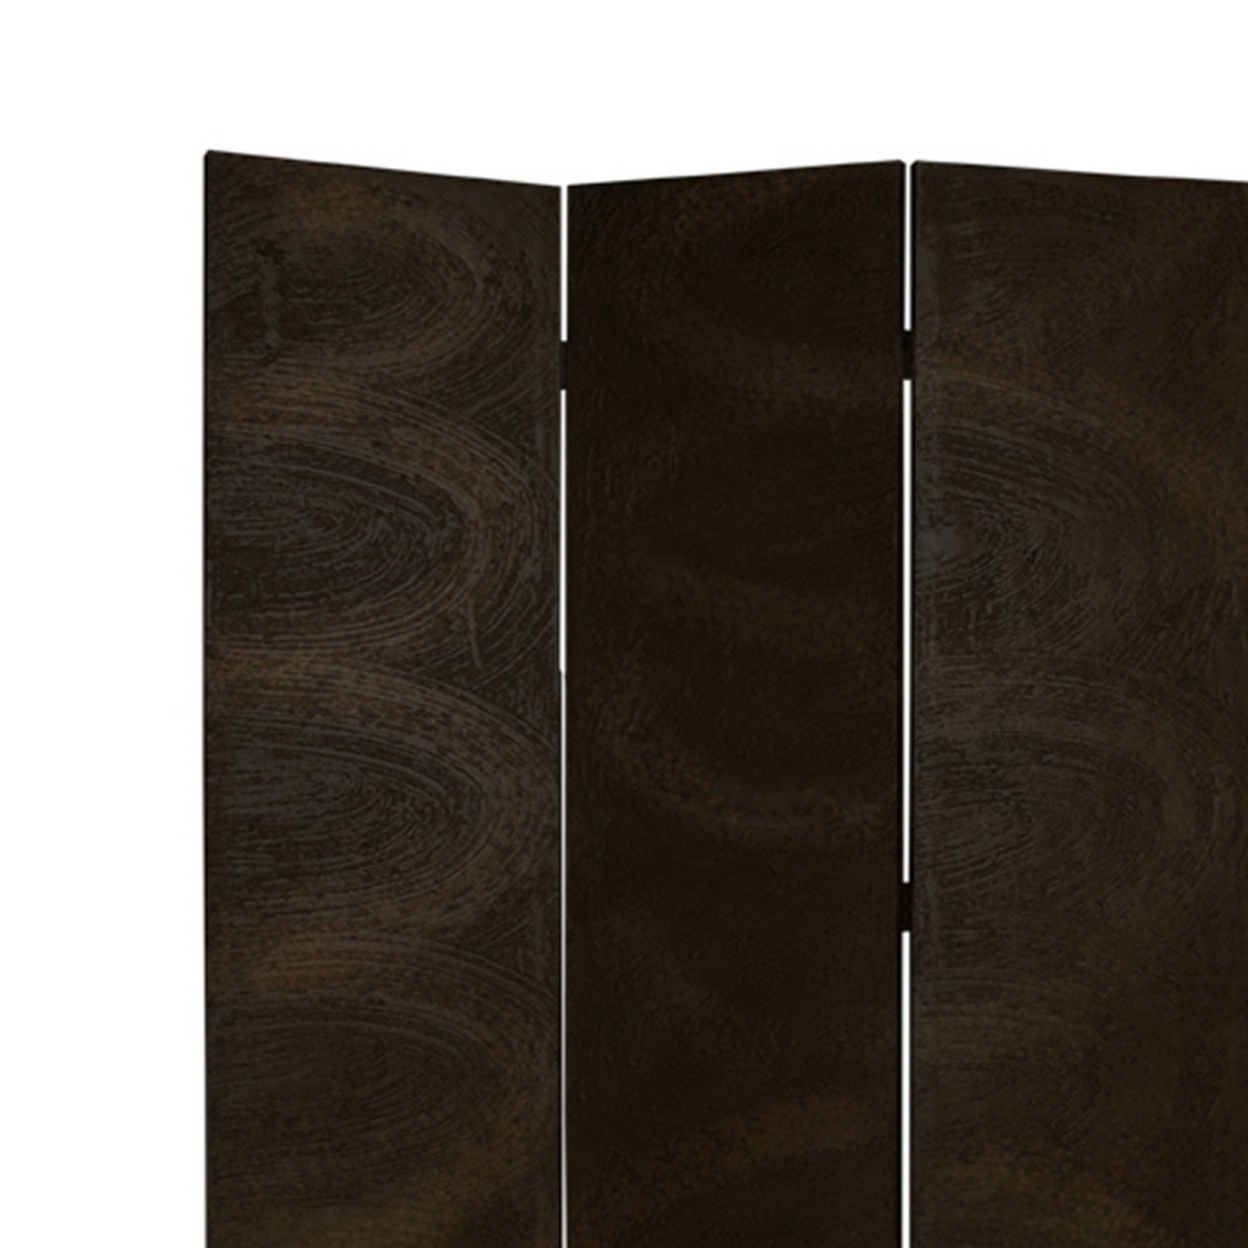 Foldable 3 Panel Canvas Room Divider With Swirl Details, Dark Brown- Saltoro Sherpi